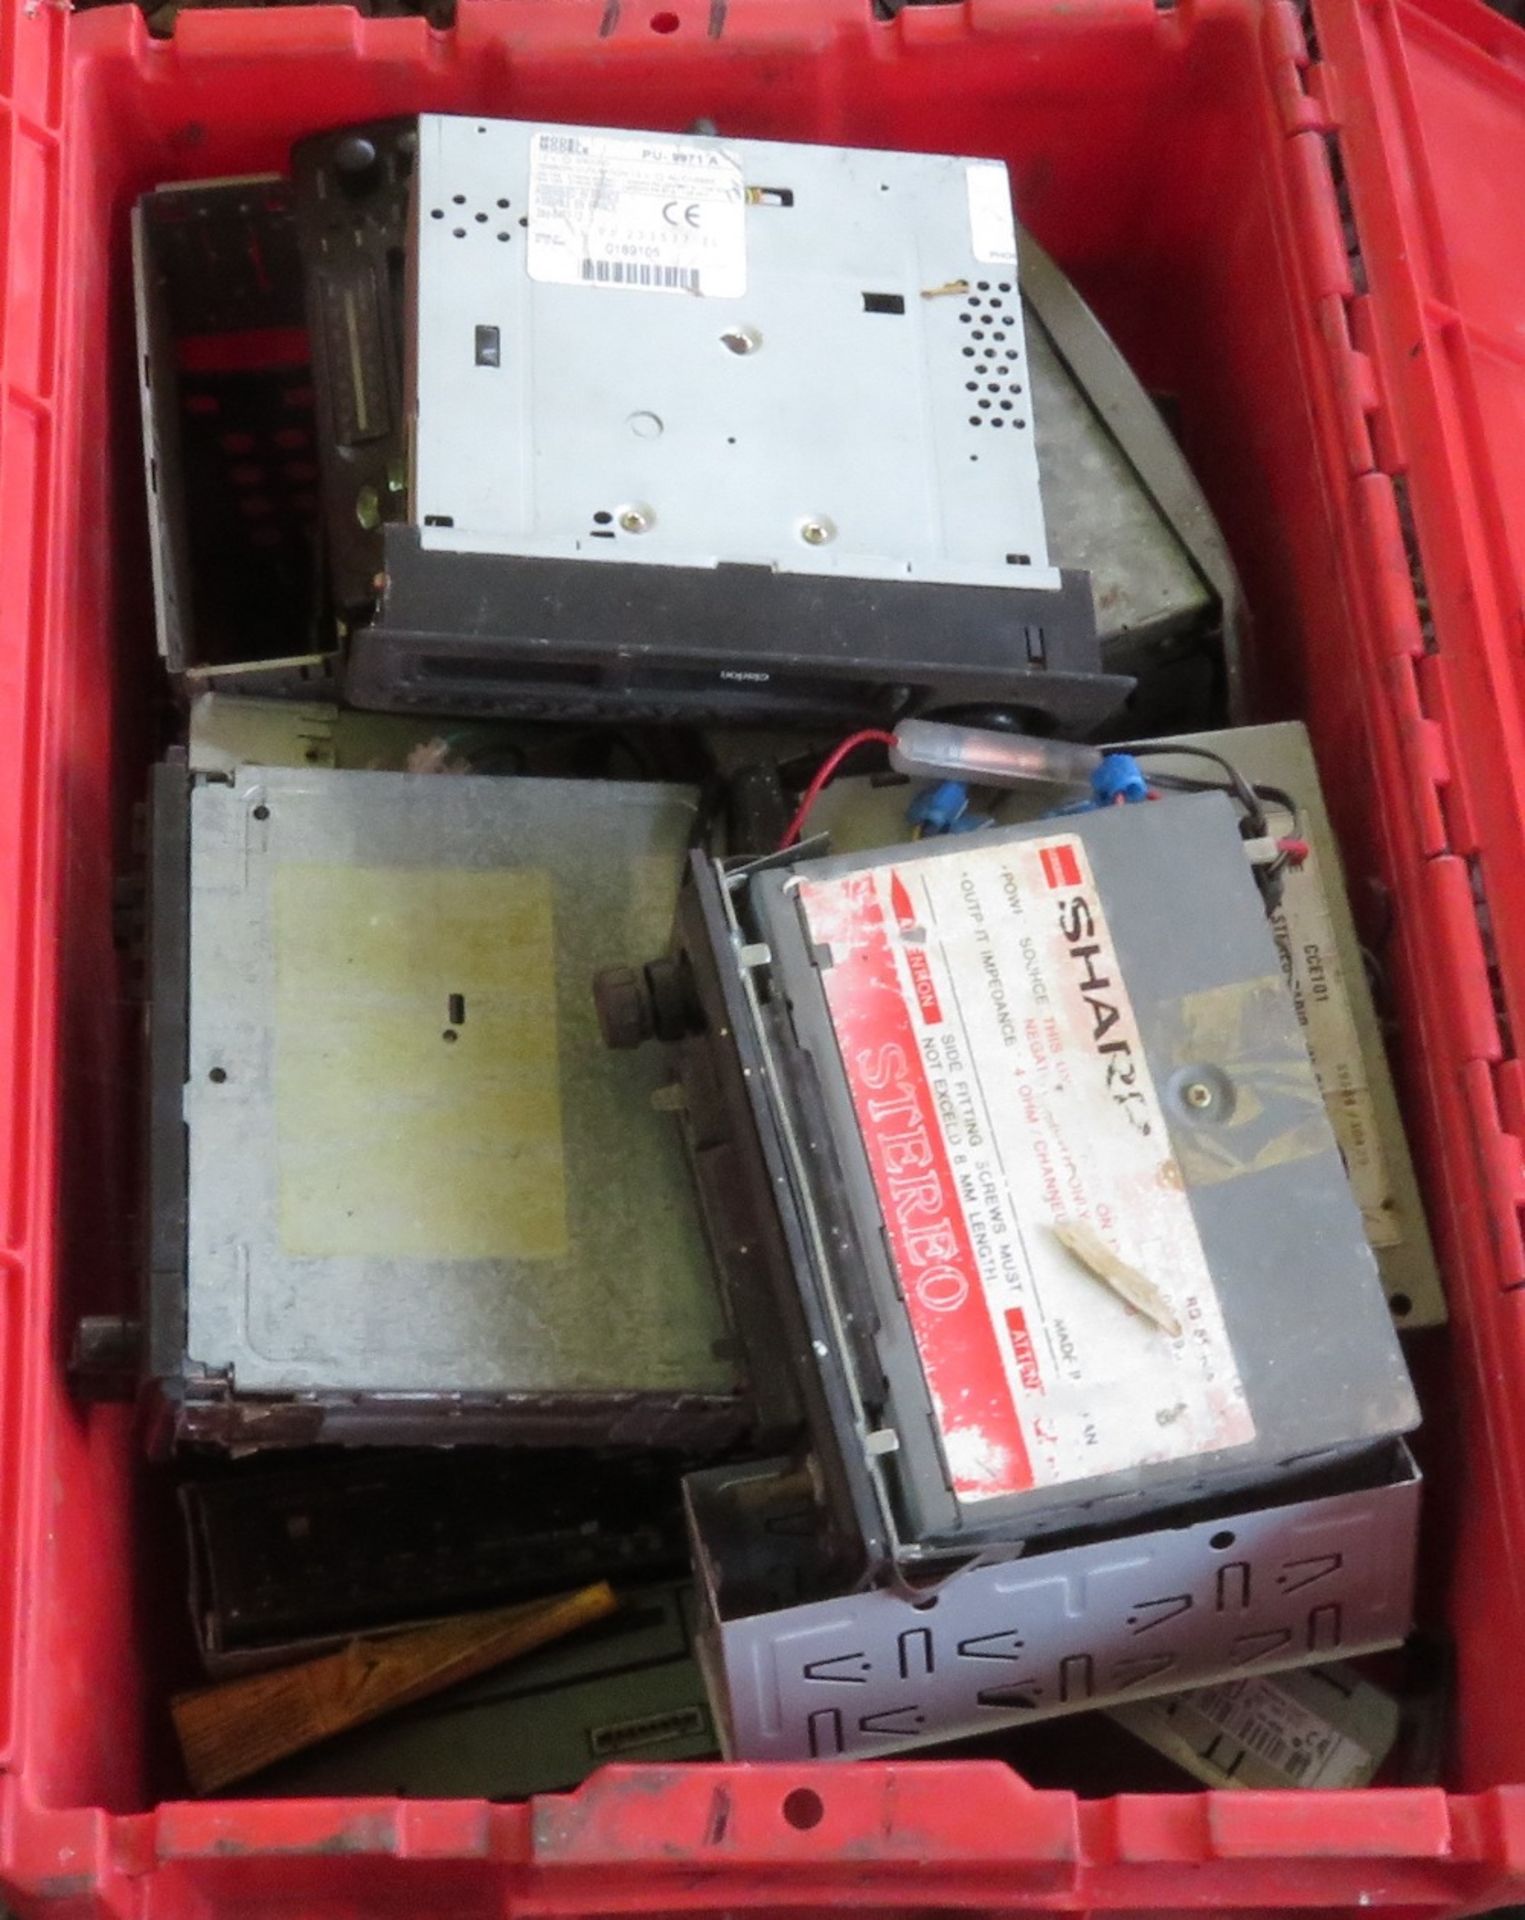 Red box containing various car radios